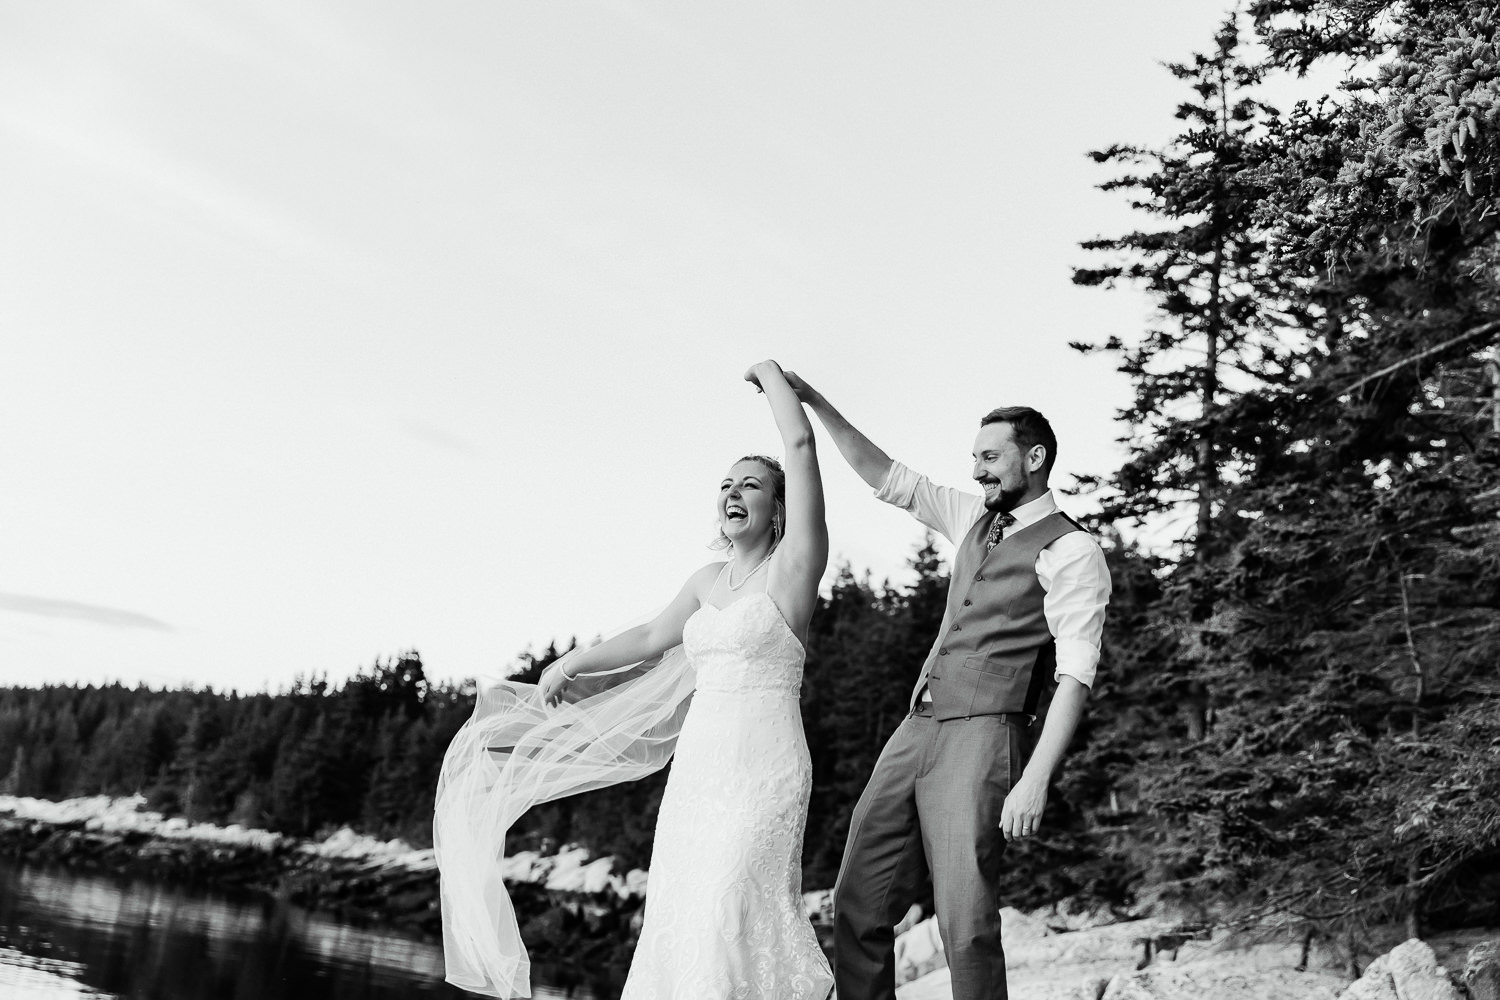 Swan's Island wedding and elopement photos